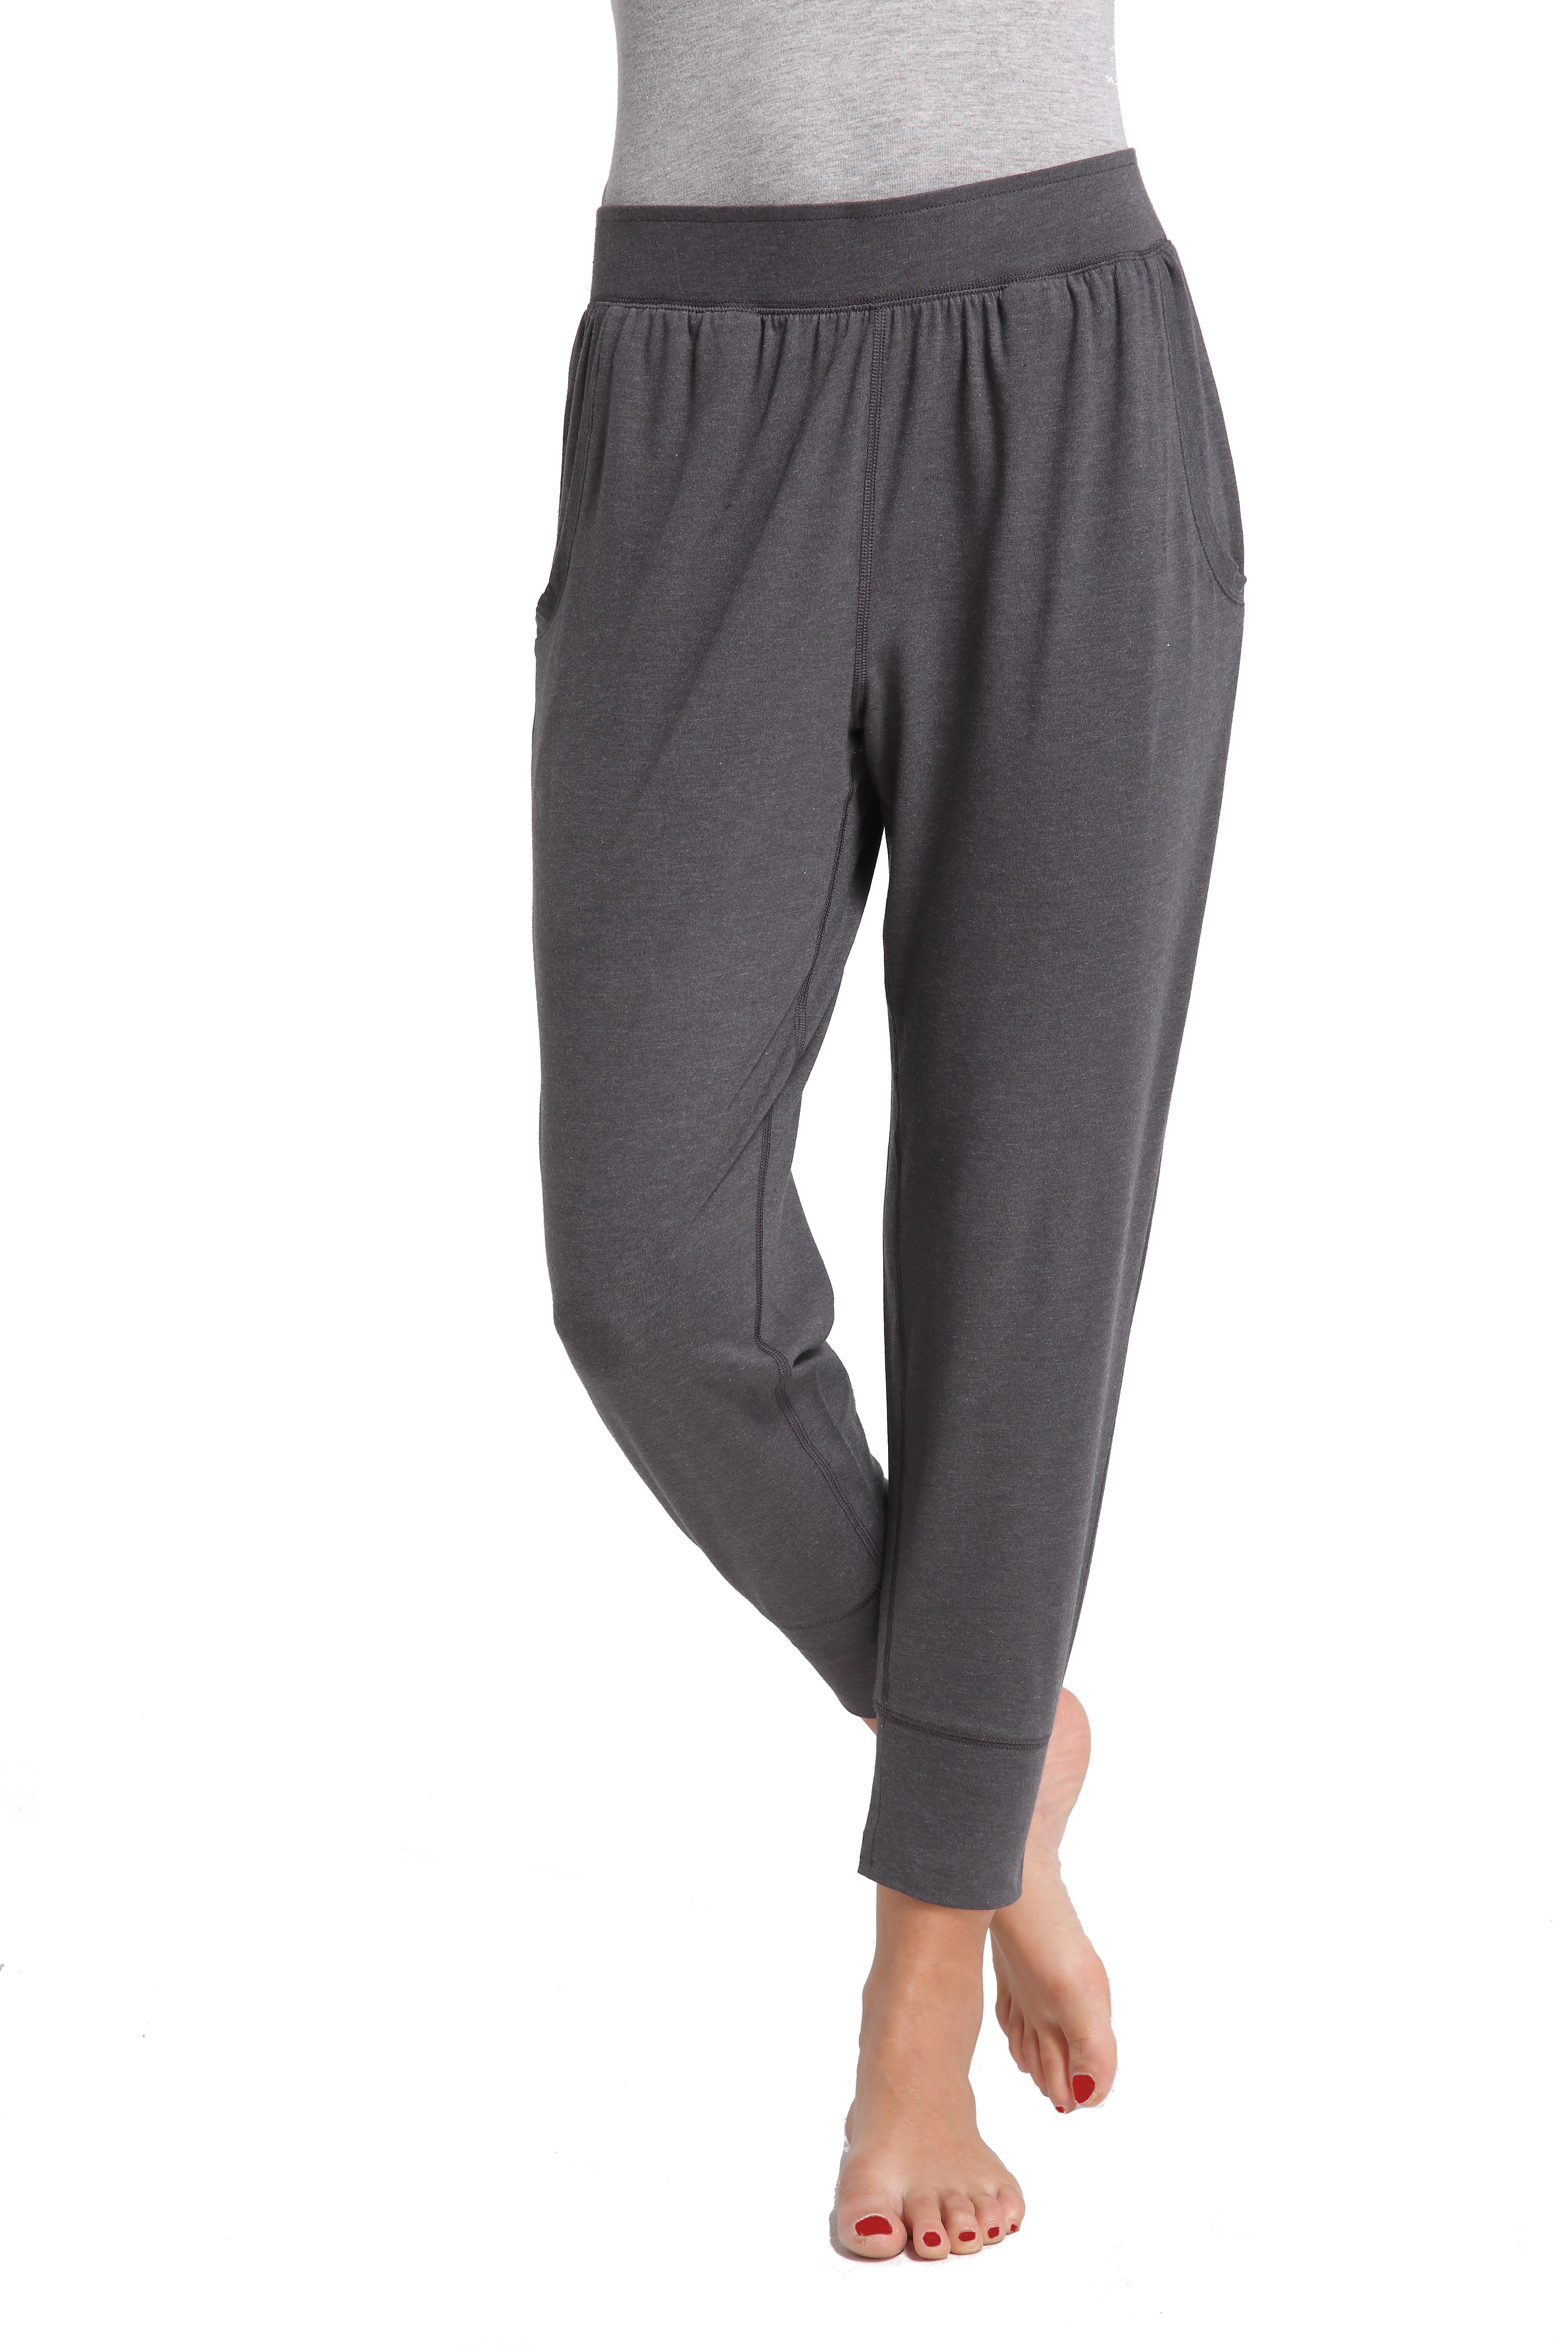 CYZ Collection - CYZ Women's Cotton Stretch Knit Pajamas Jogger Pants ...